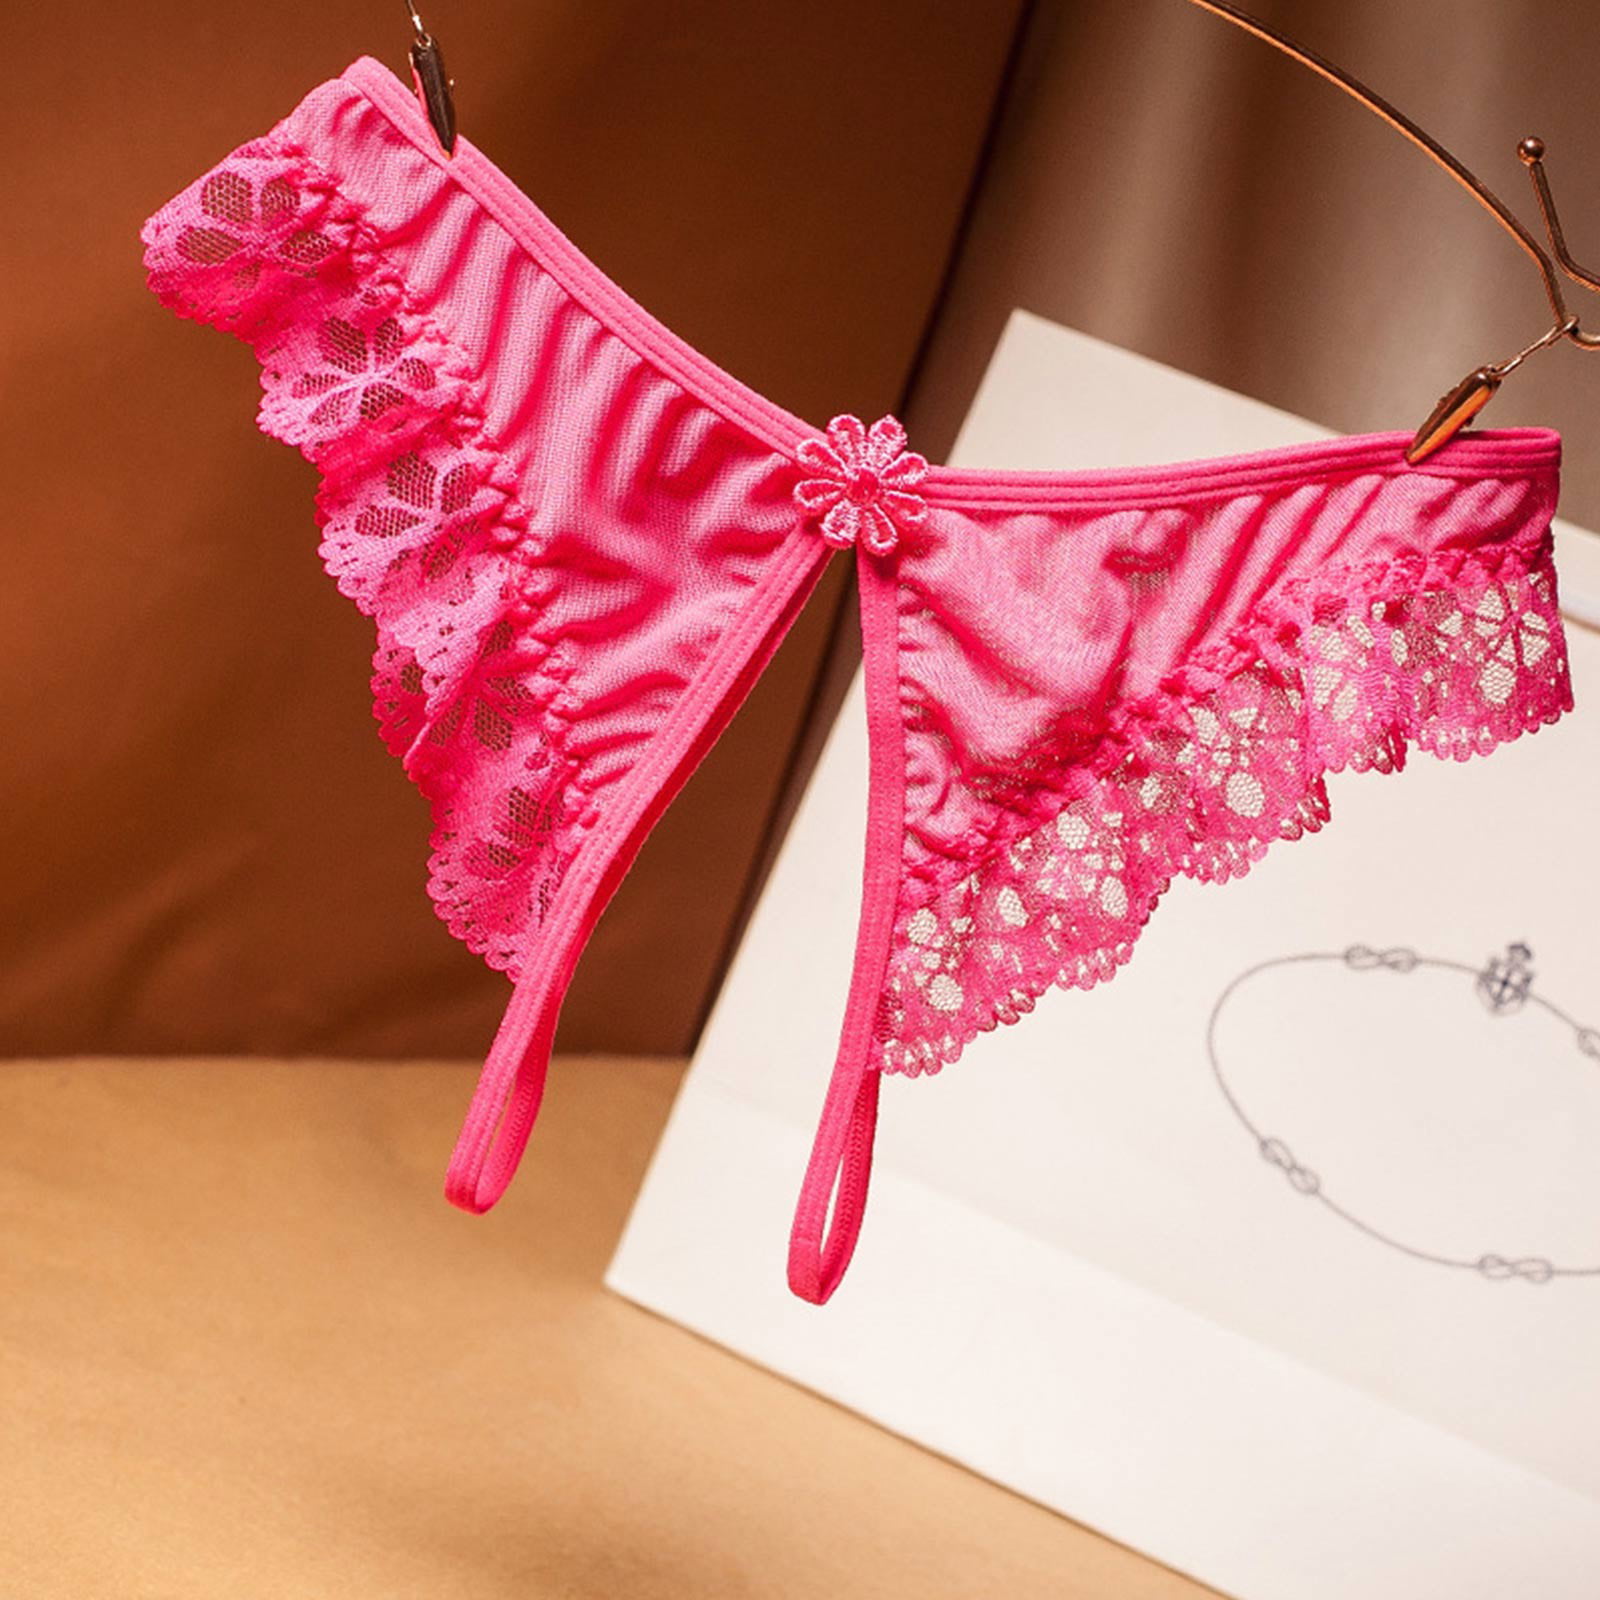 Aayomet Thong Underwear Women Women Panties Open File Slit Sex Lace Thong Low Waist Panties,Hot Pink One Size image